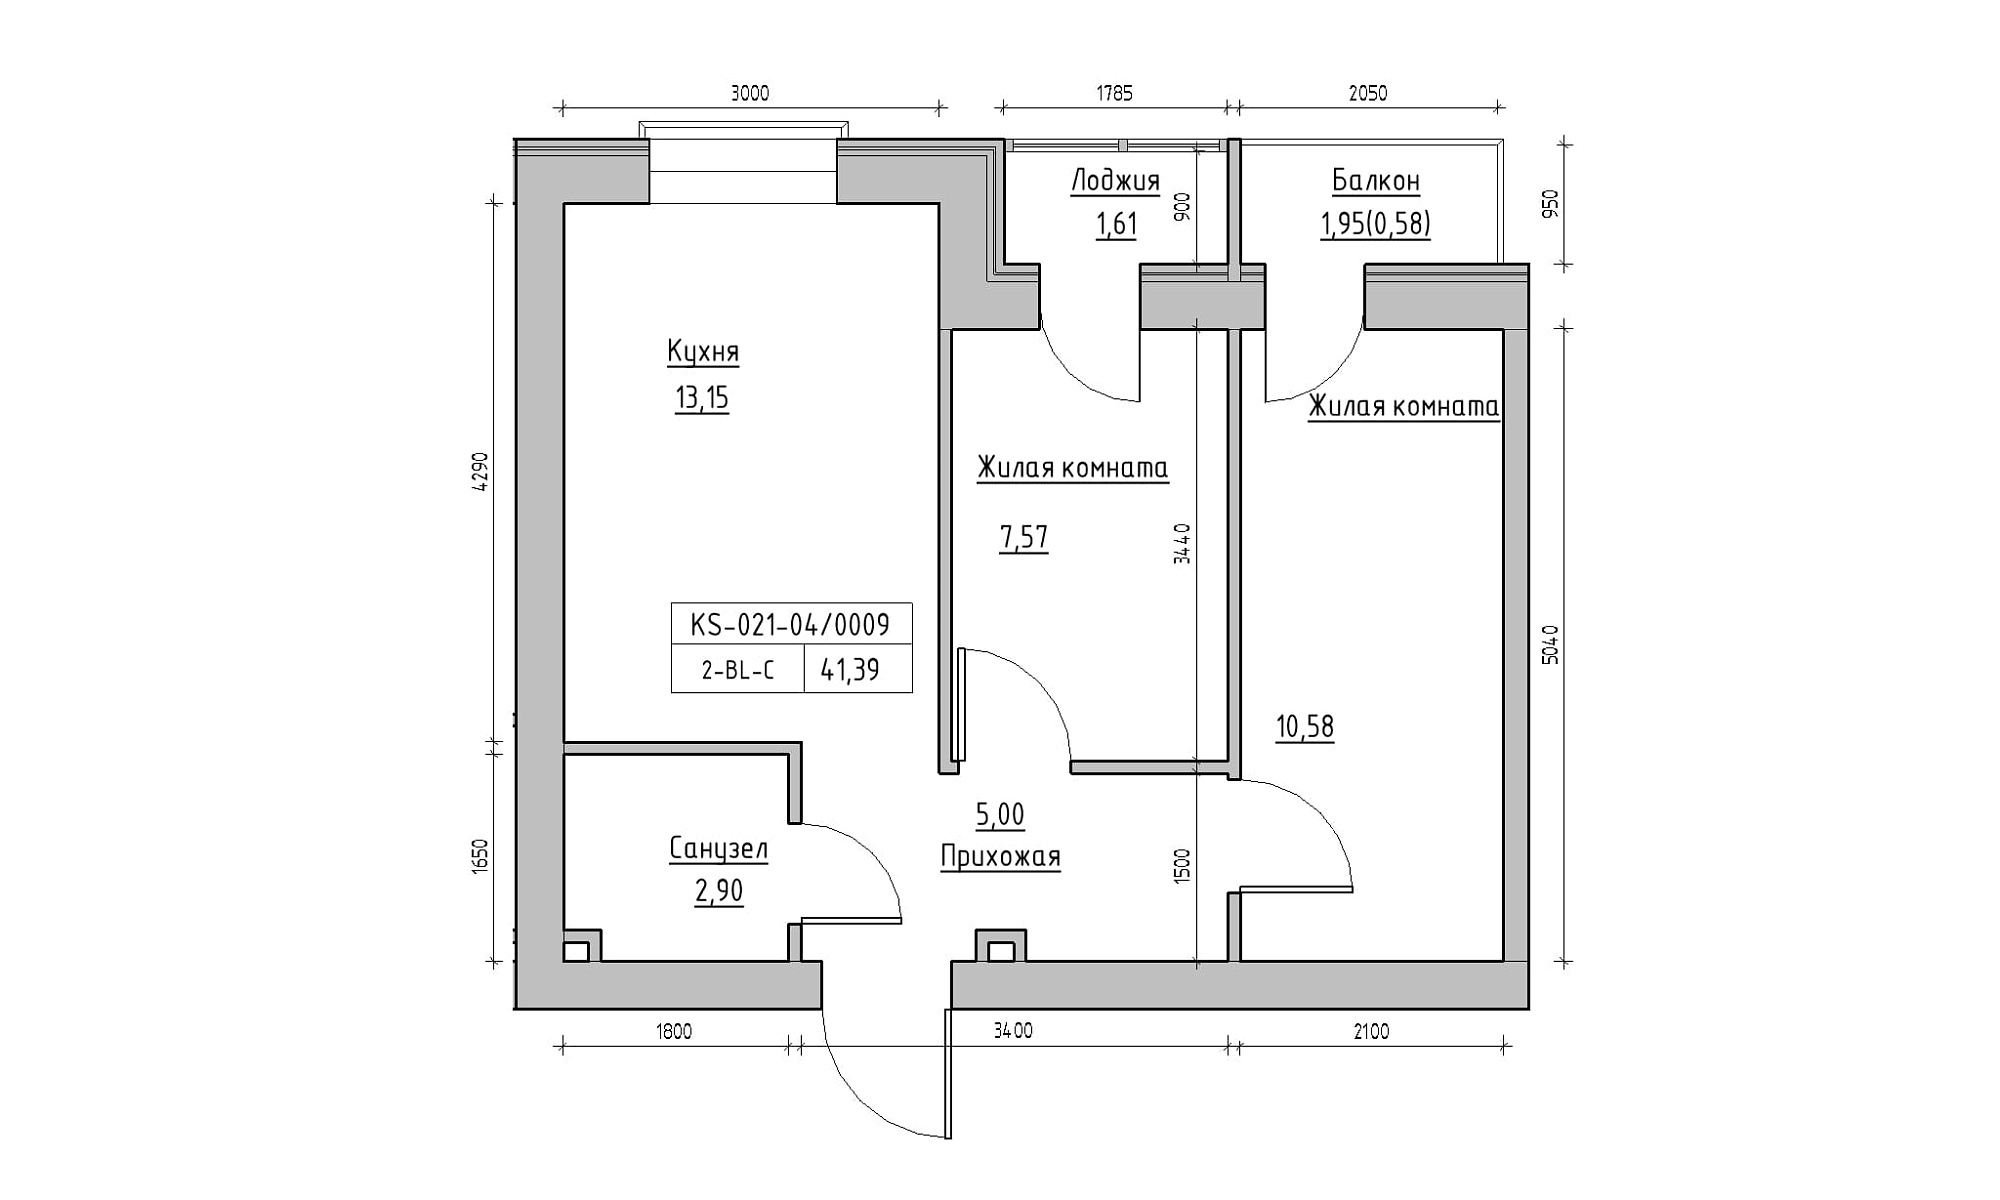 Planning 2-rm flats area 41.39m2, KS-021-04/0009.